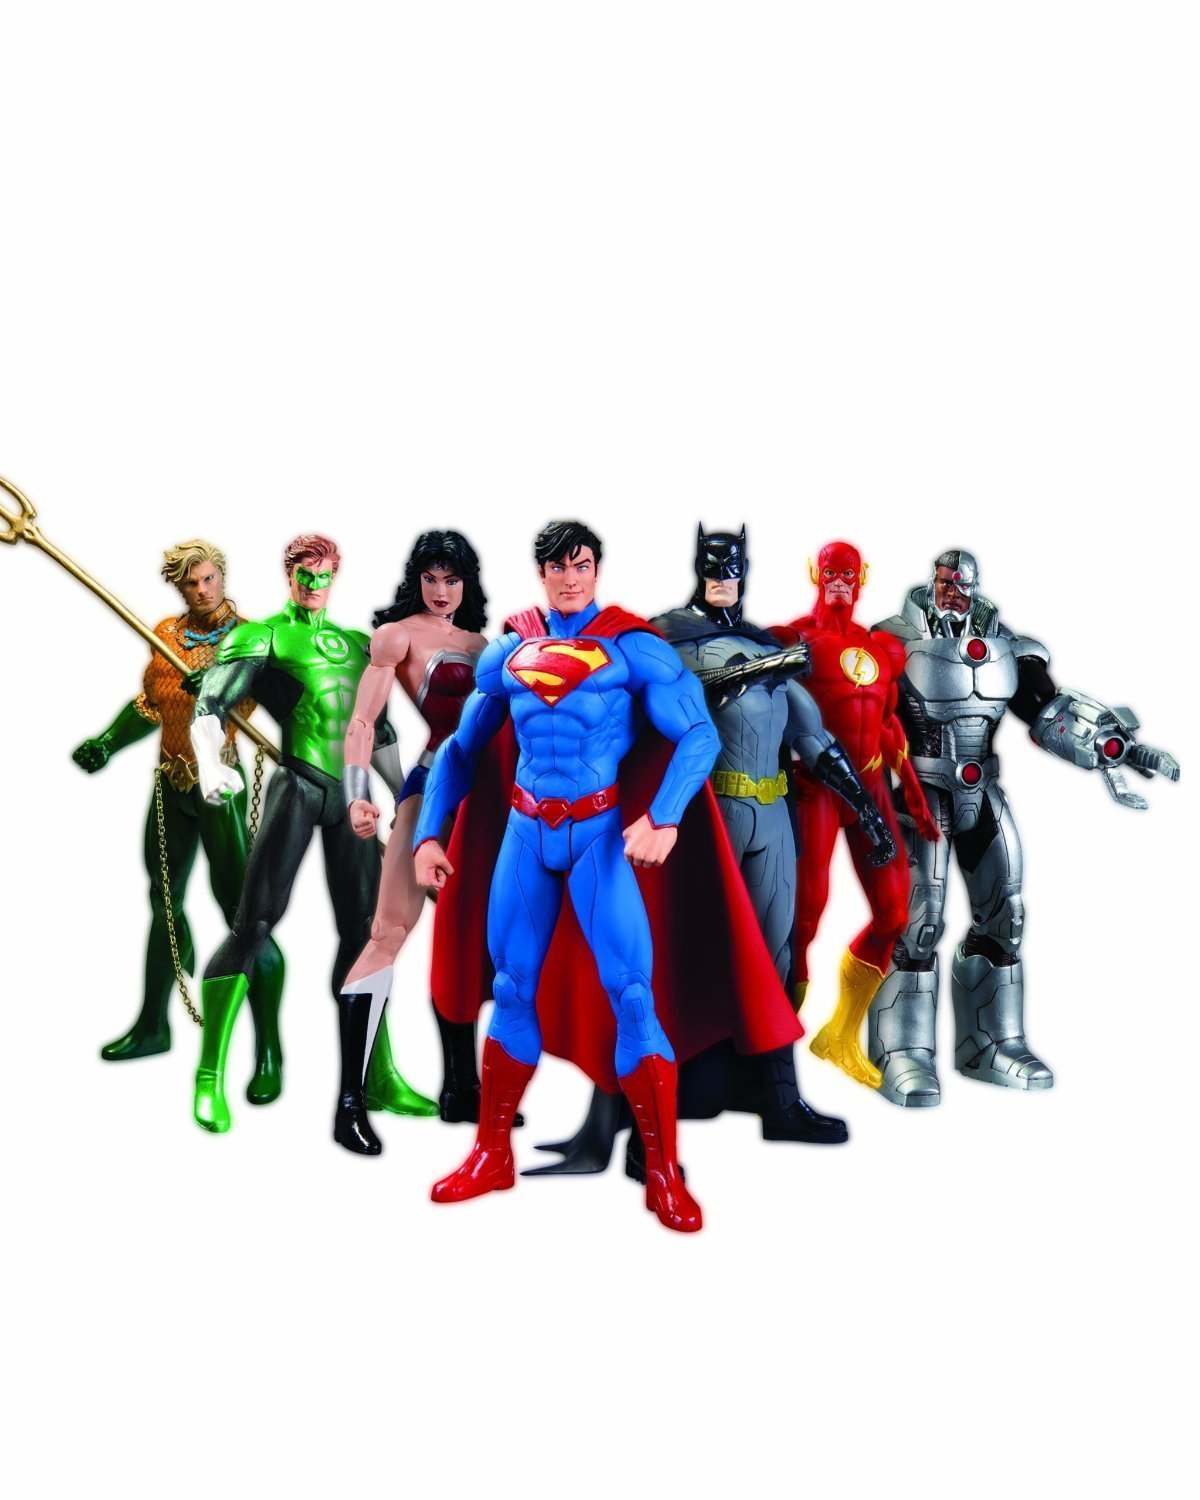 DC Justice League Collectible Figures